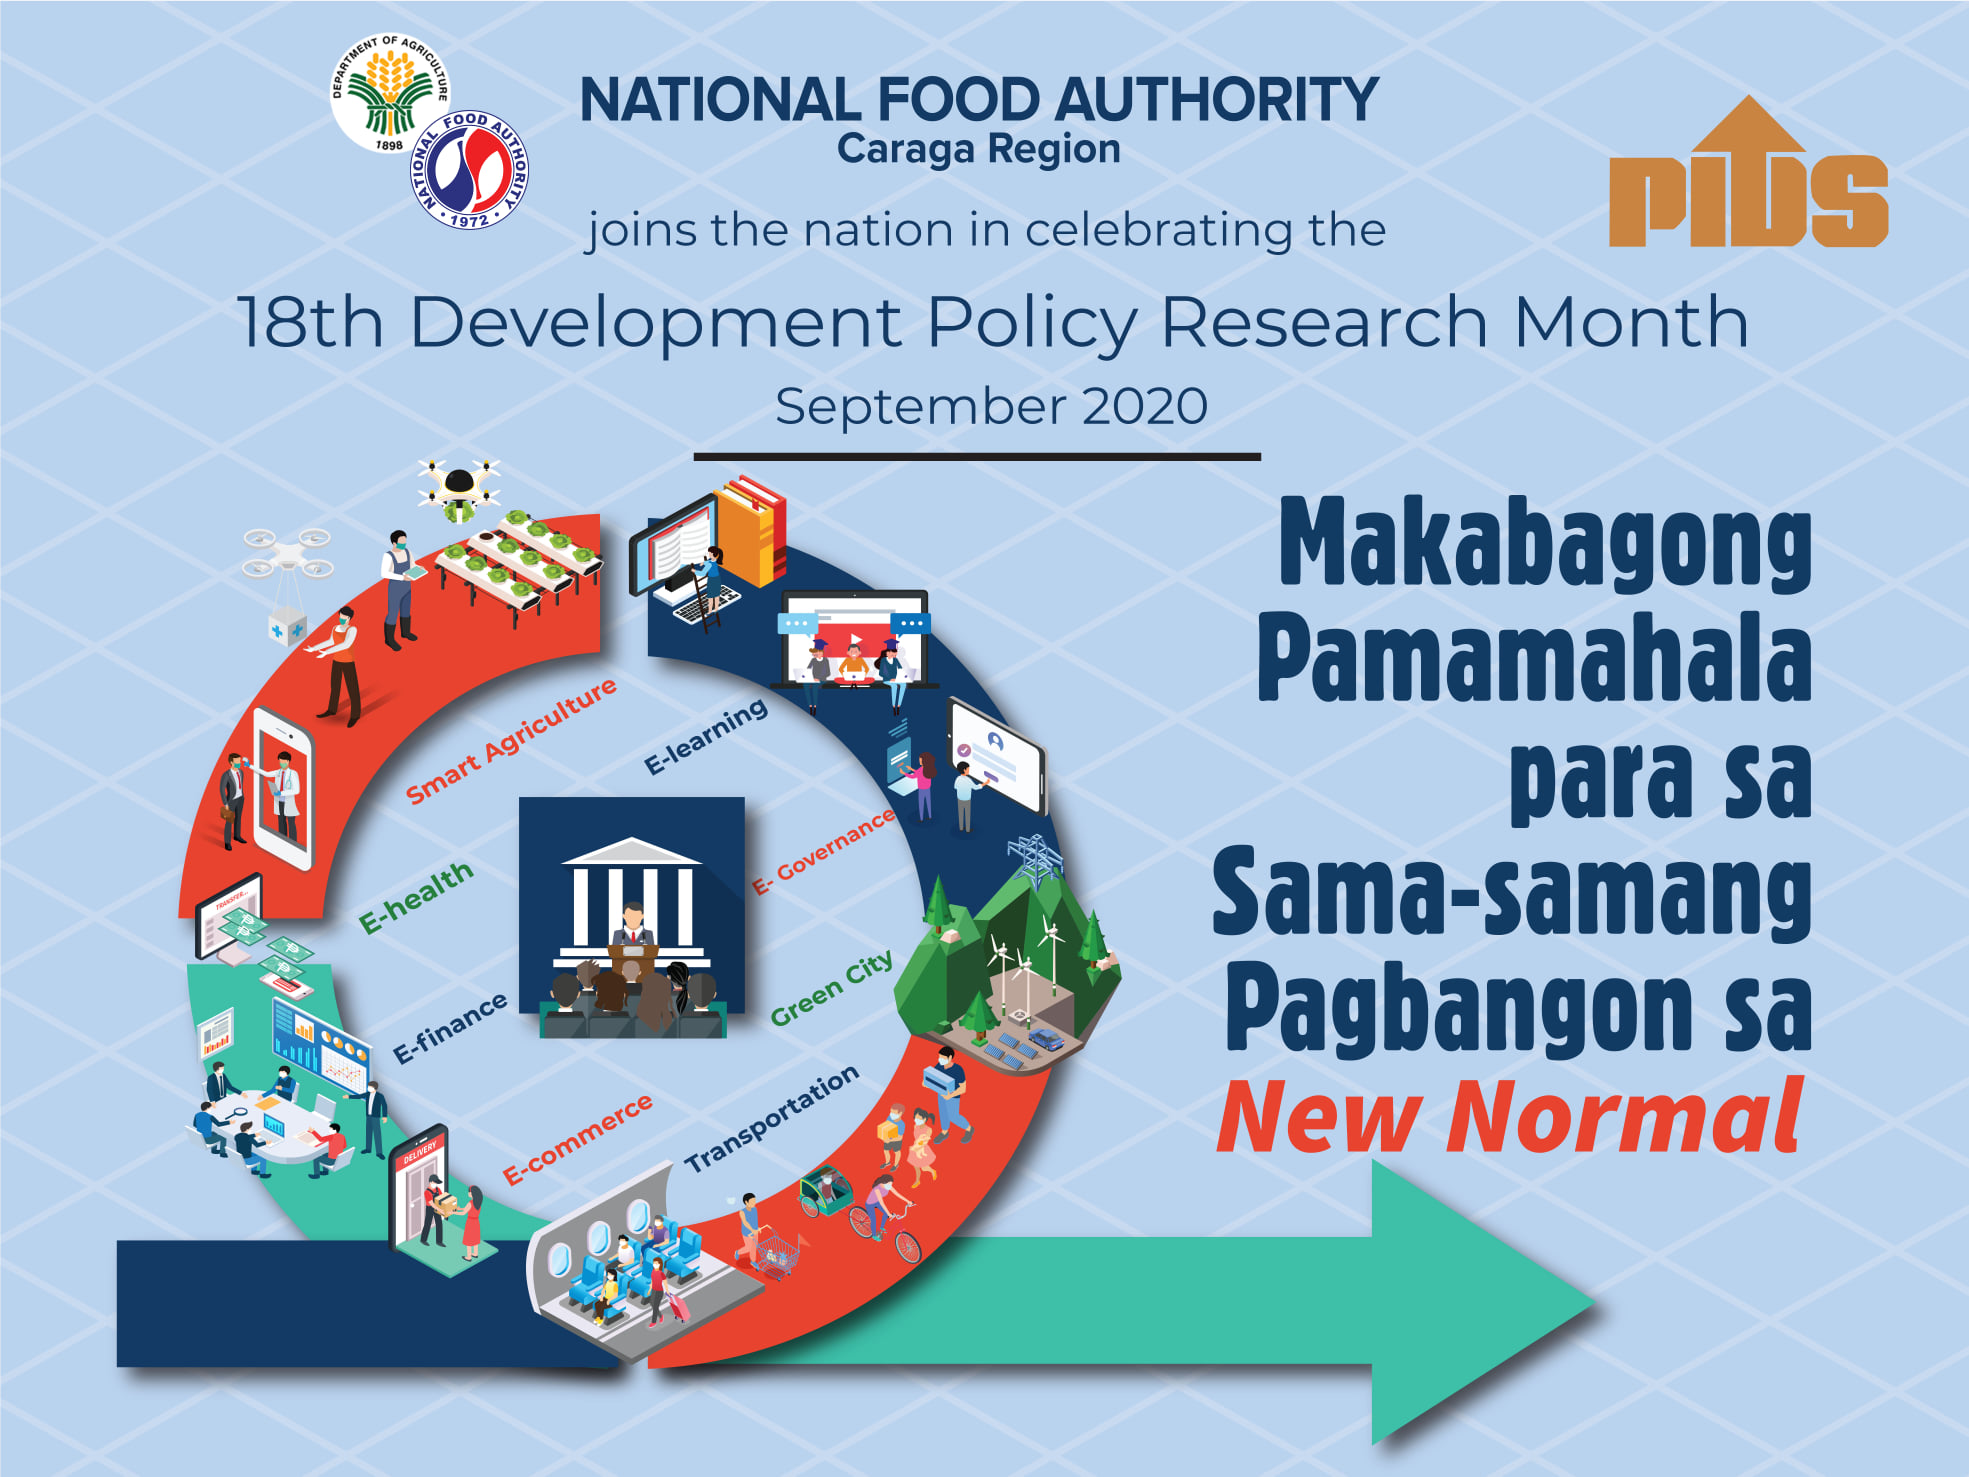 National Food Authority - Caraga